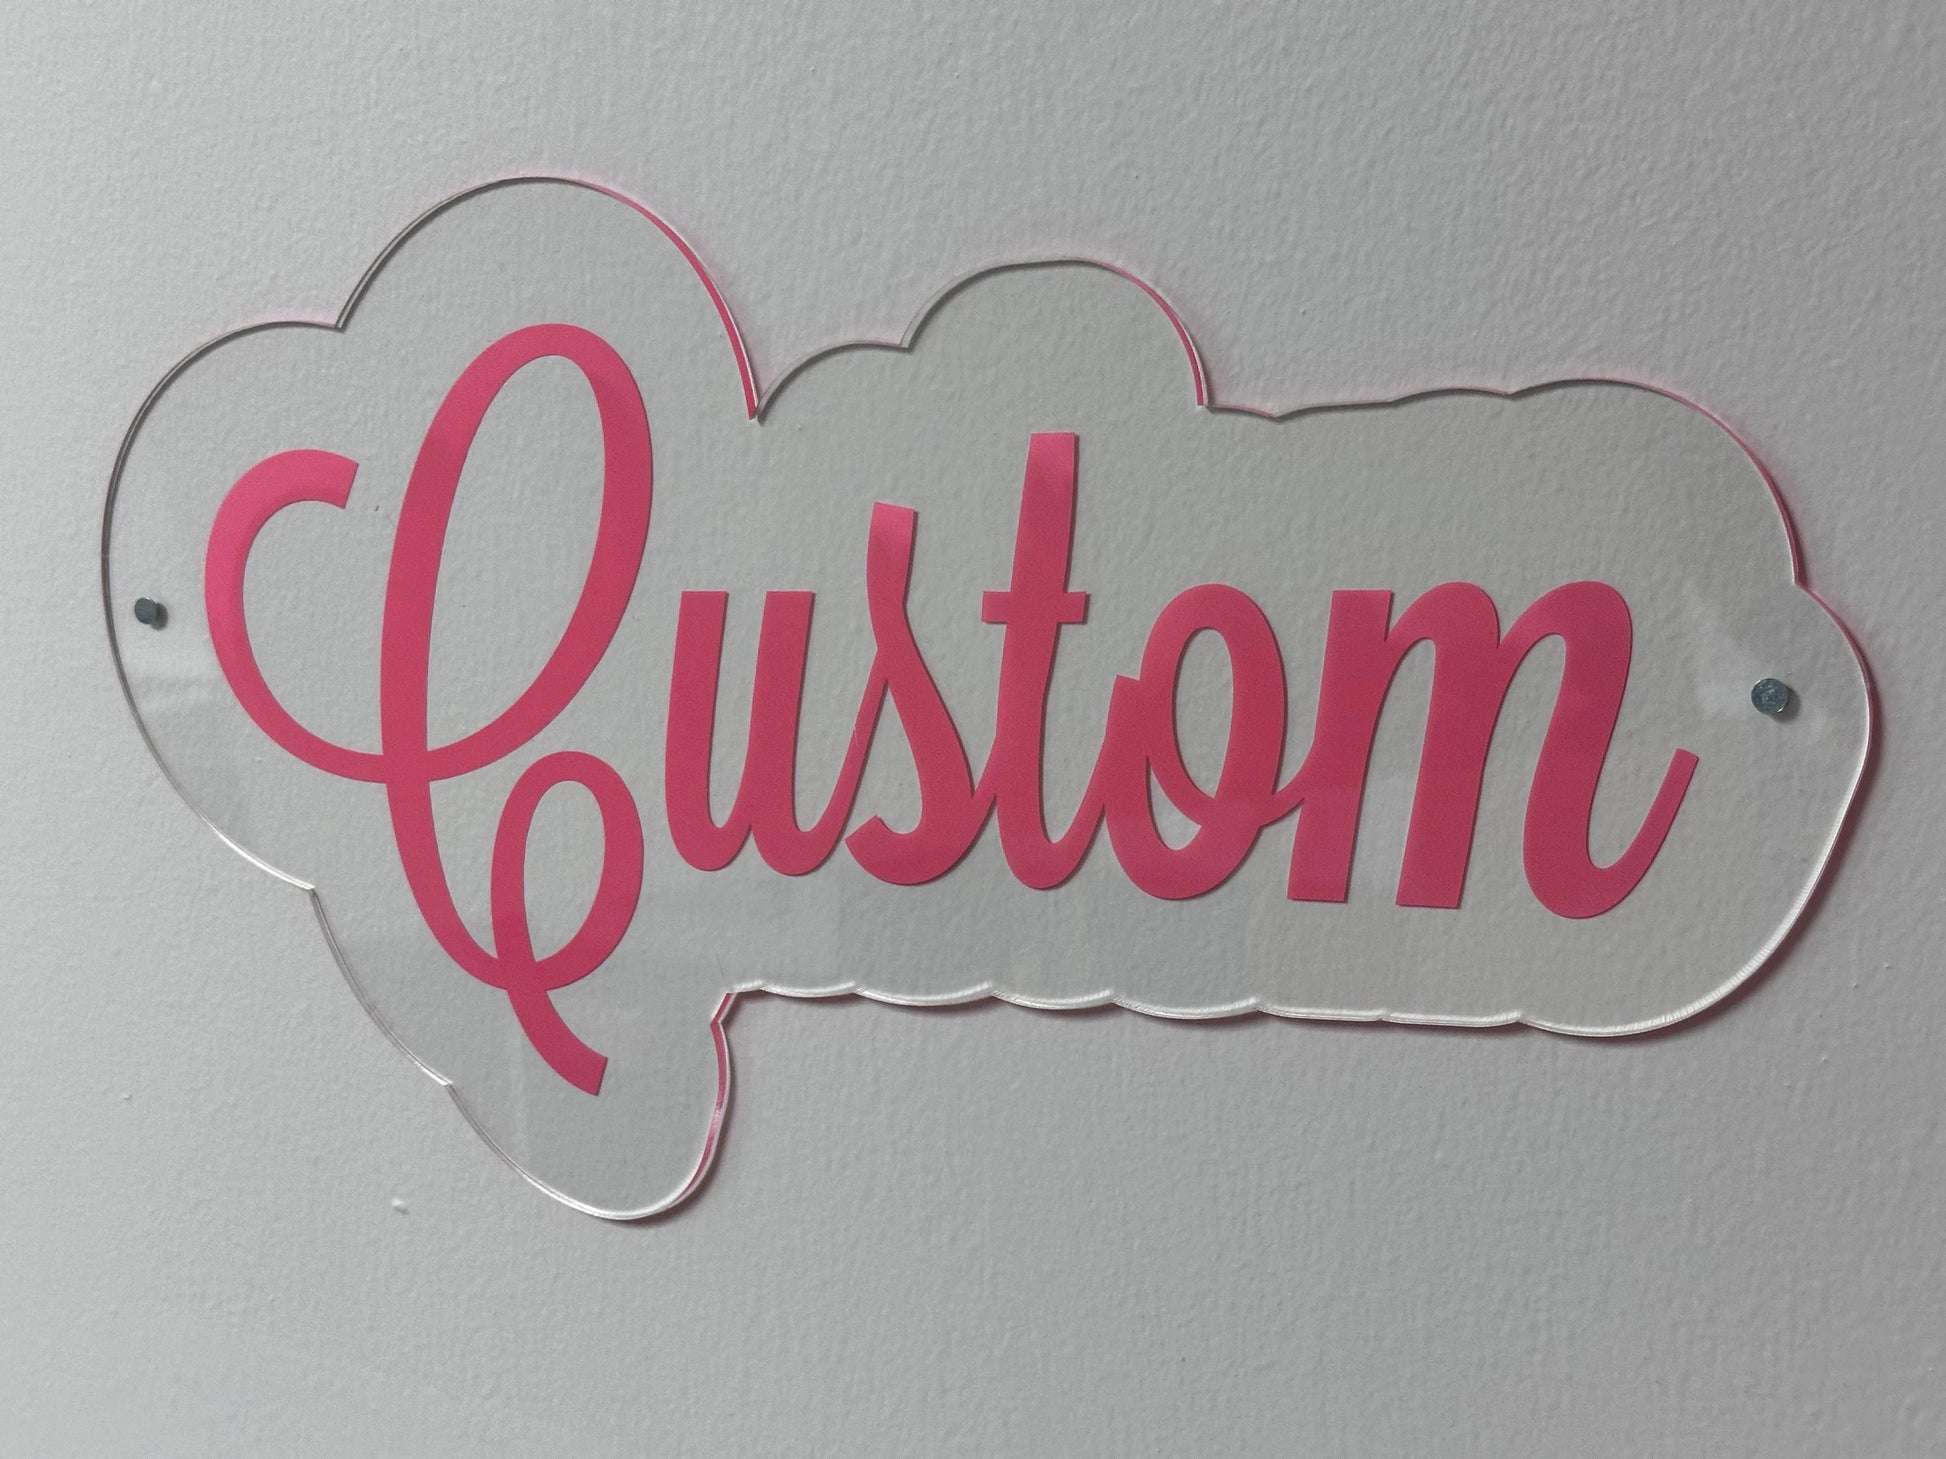 Acrylic Offset Custom Sign - Professional Artwork